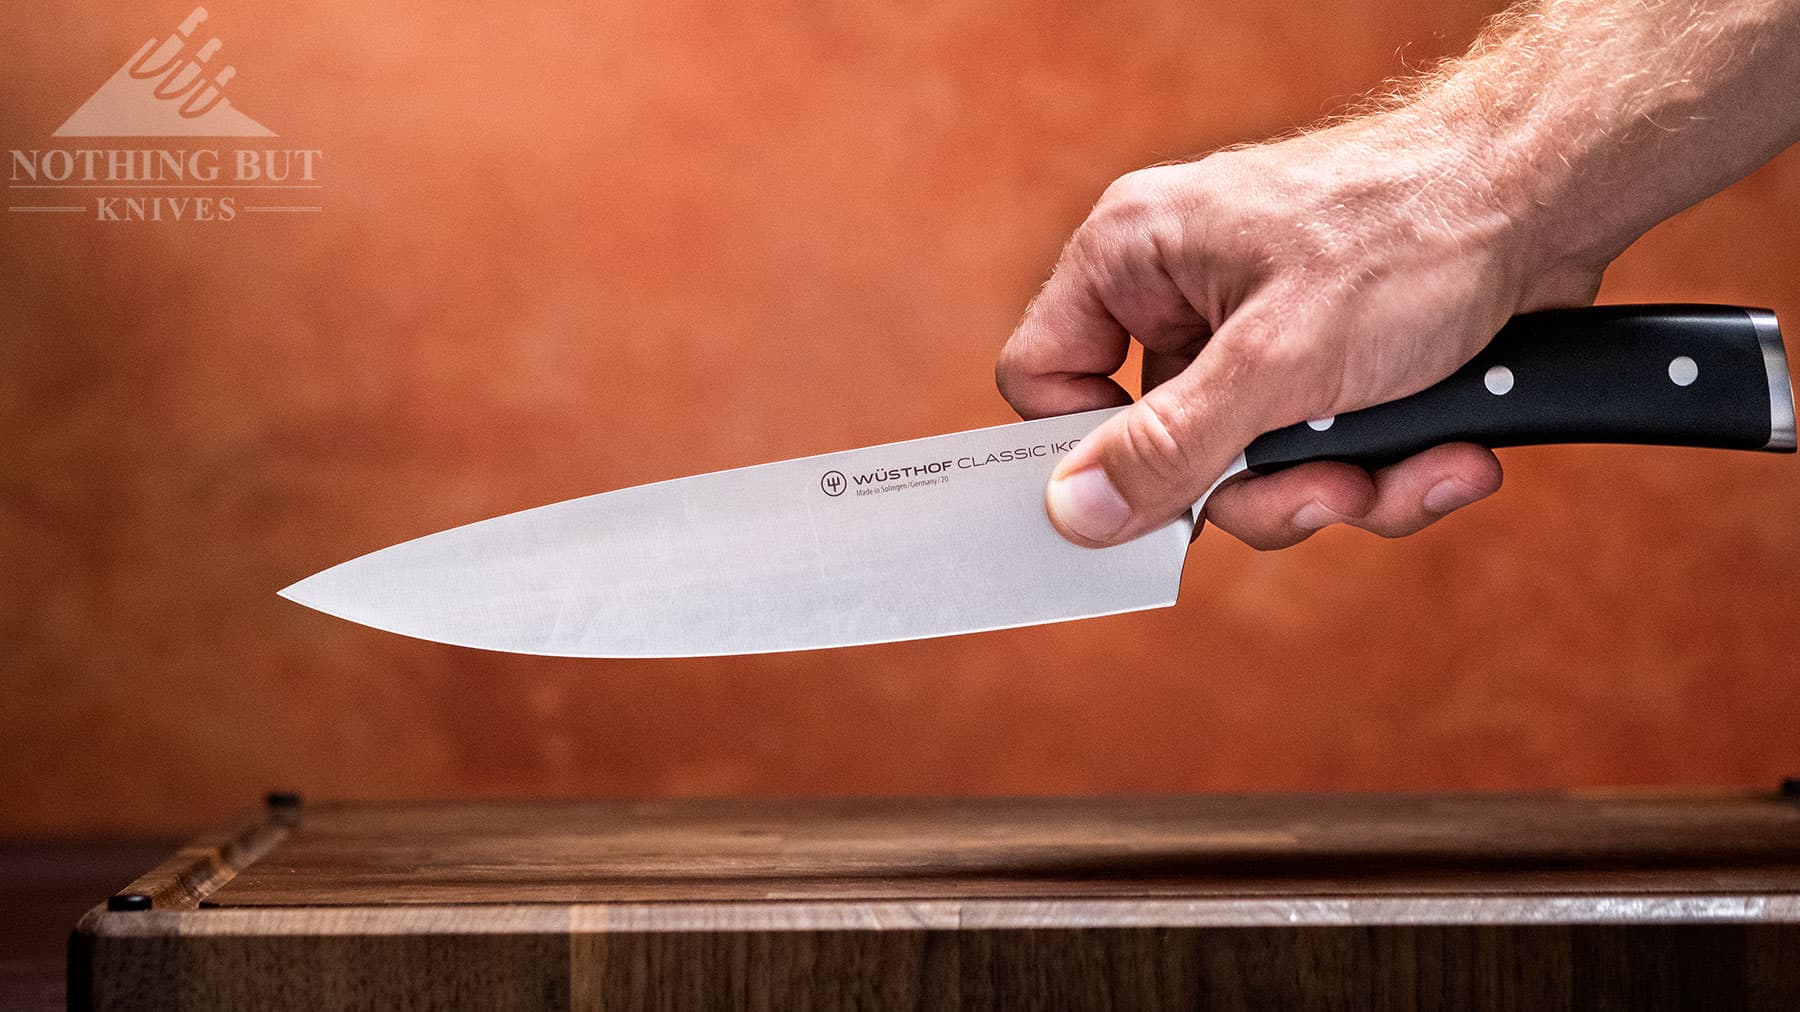 The eight inch Classic Ikon chef knife balance ishandle heavy. 